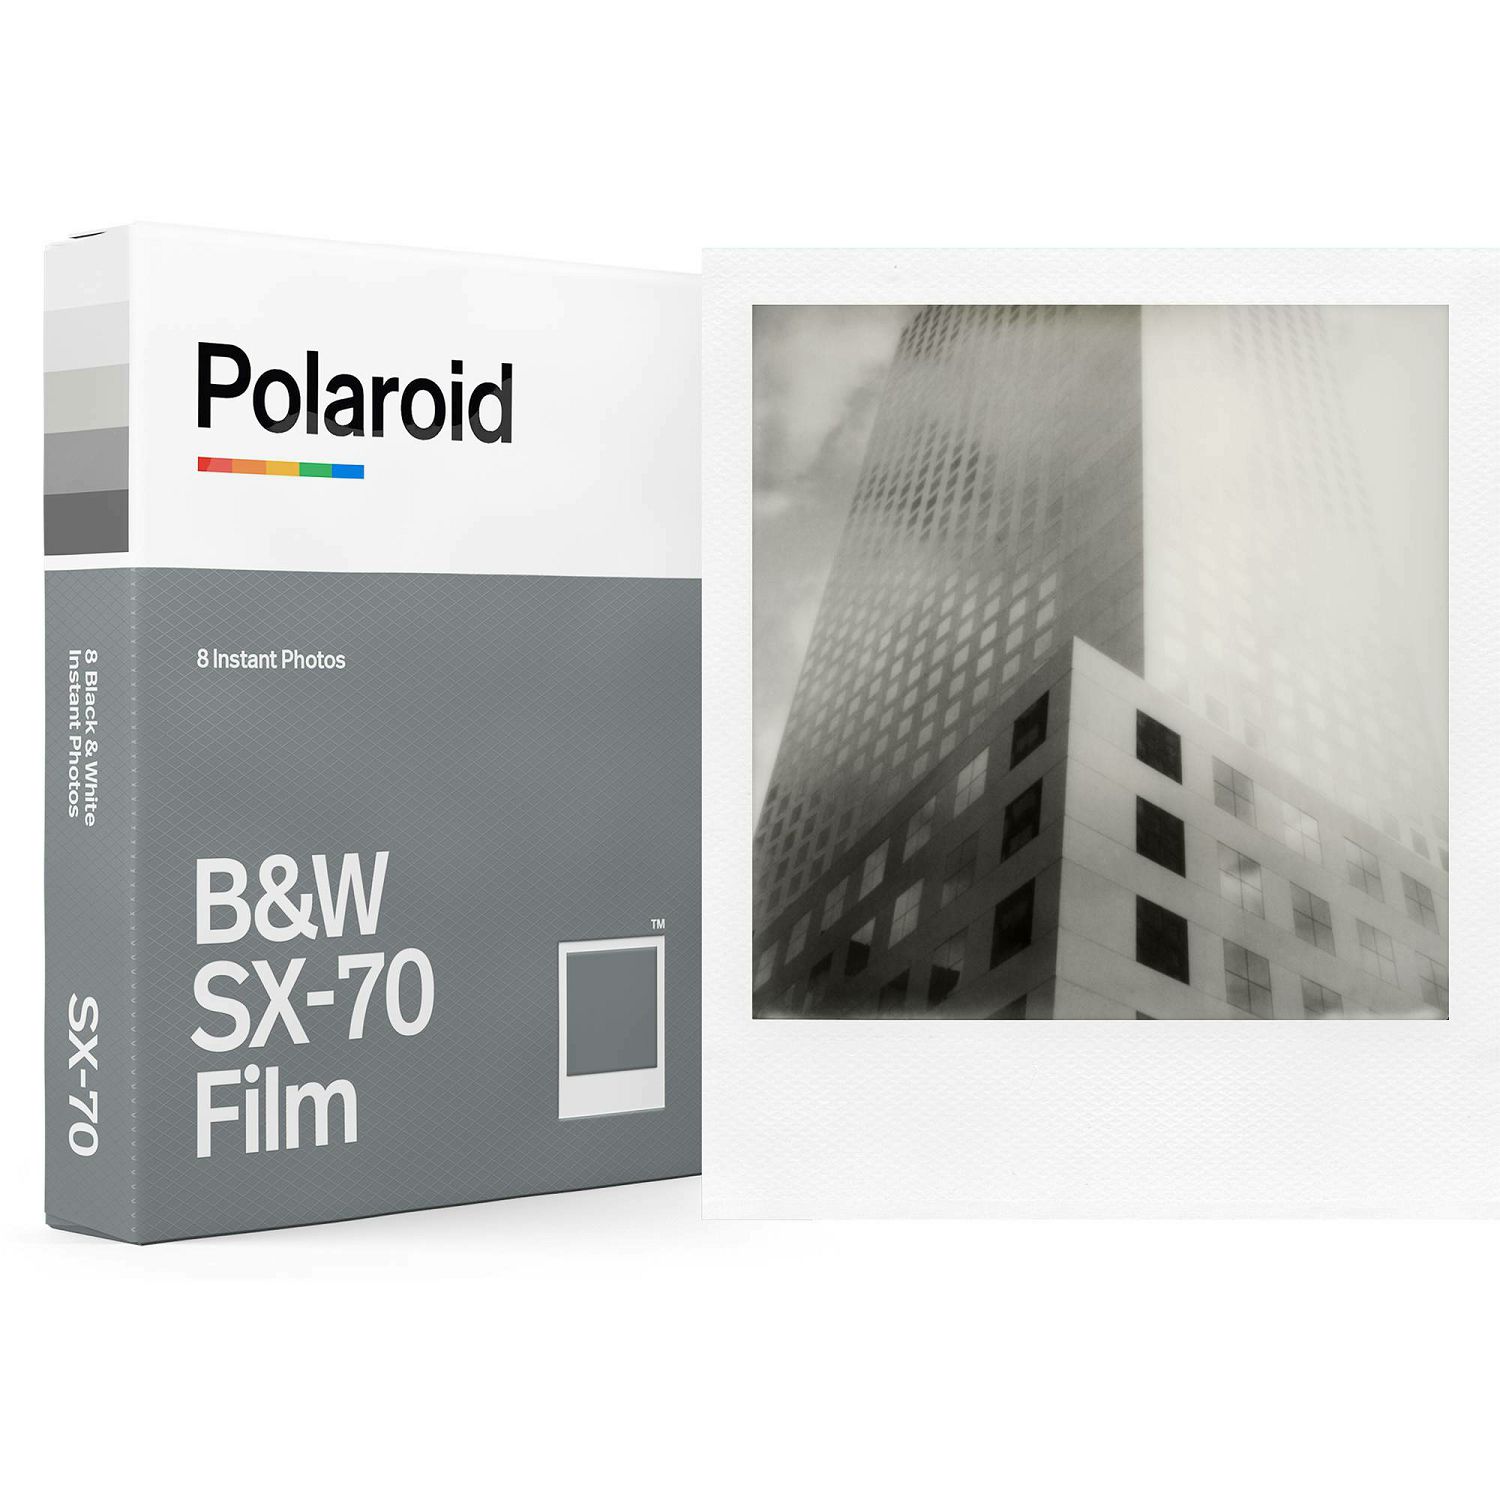 Polaroid Originals B&W Film for SX-70 Cameras papir za crno-bijele fotografije za Instant fotoaparate (006005)